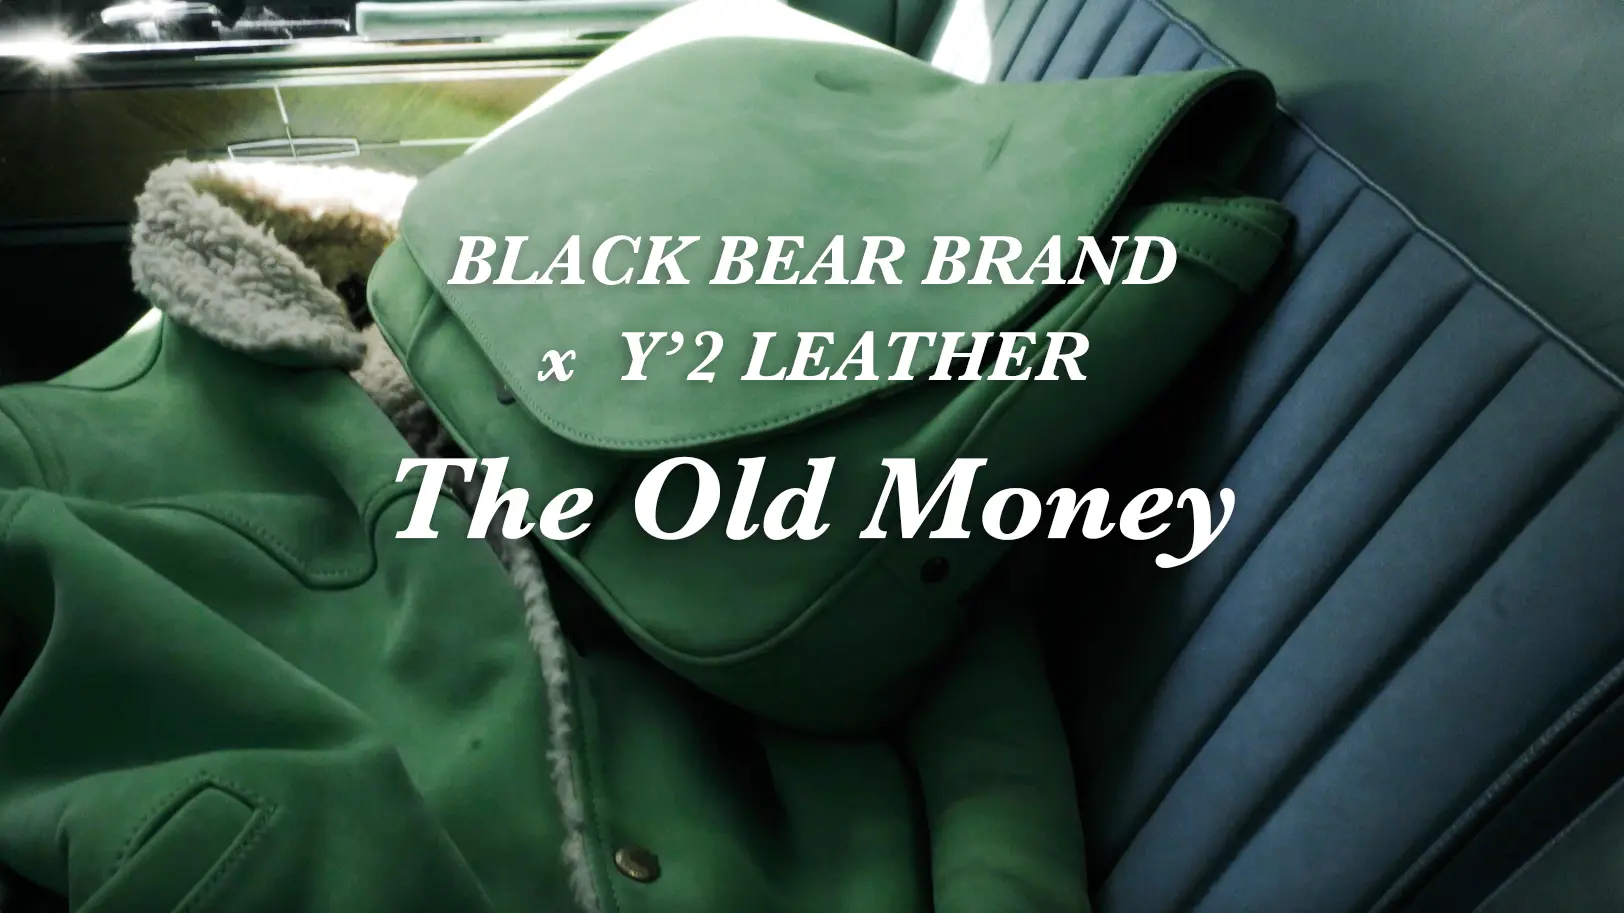 BLACK BEAR BRAND x Y'2 LEATHER - The Old Money ショートムービー公開 レザージャケット 革ジャン